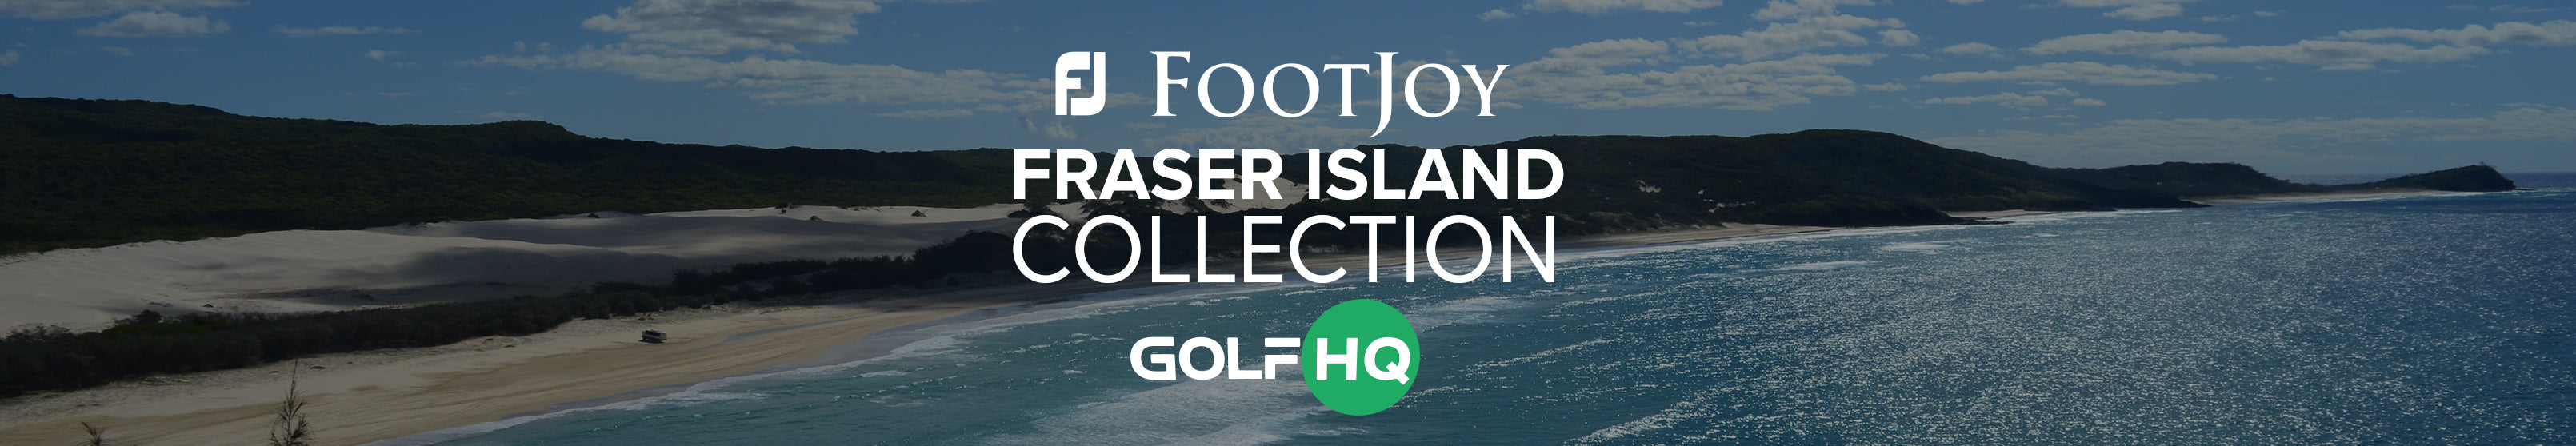 FootJoy Fraser Island Collection